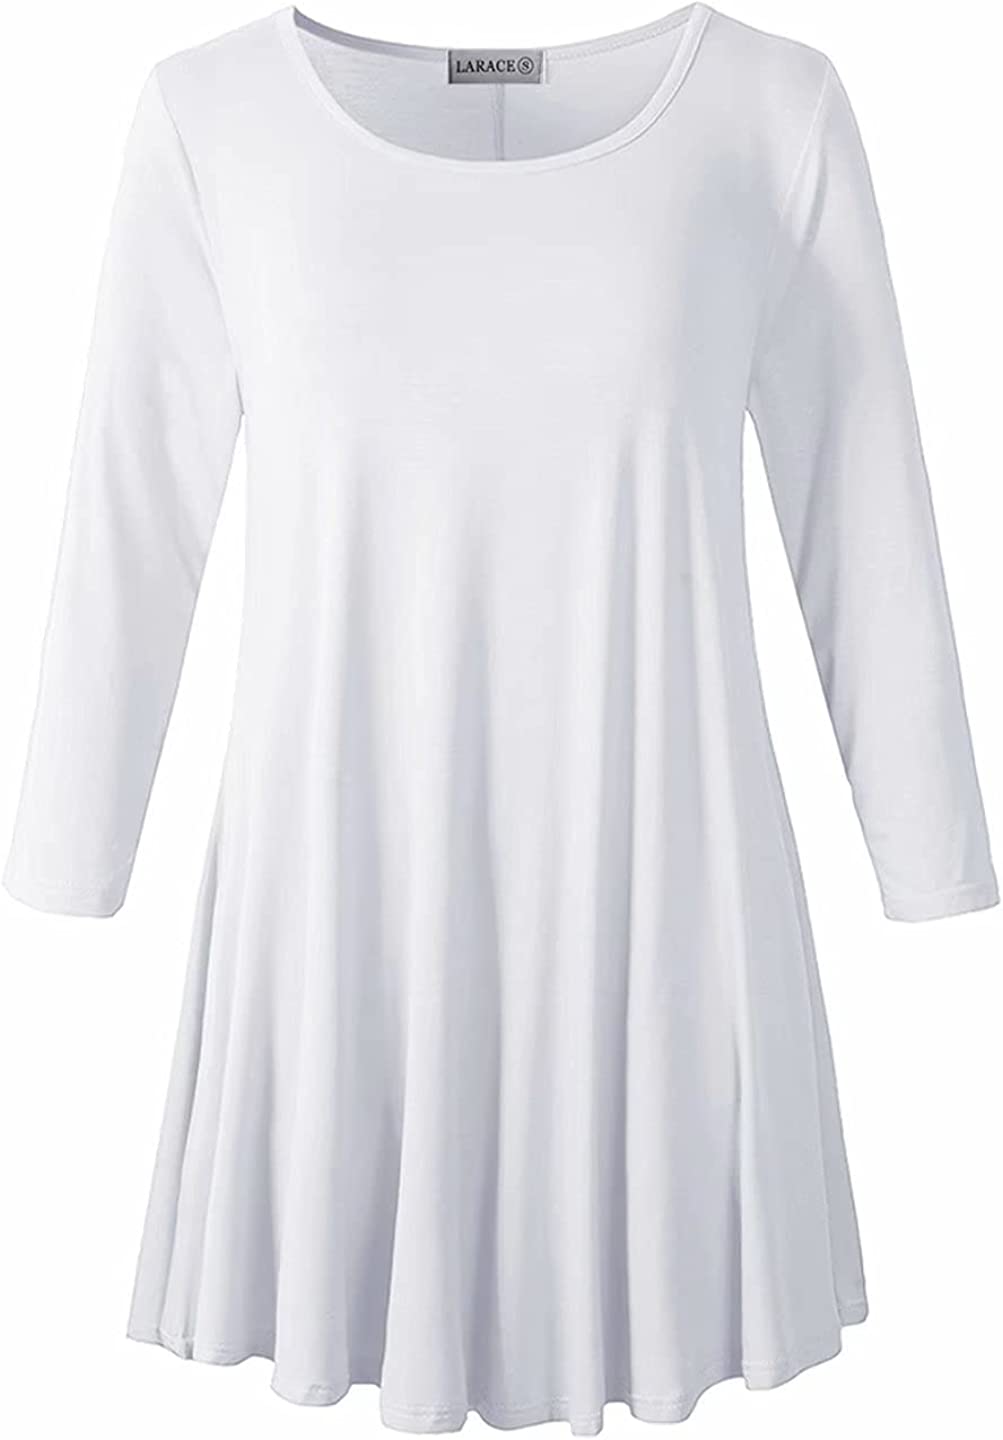 White Mark Women's Plus Size Embellished Top - Walmart.com